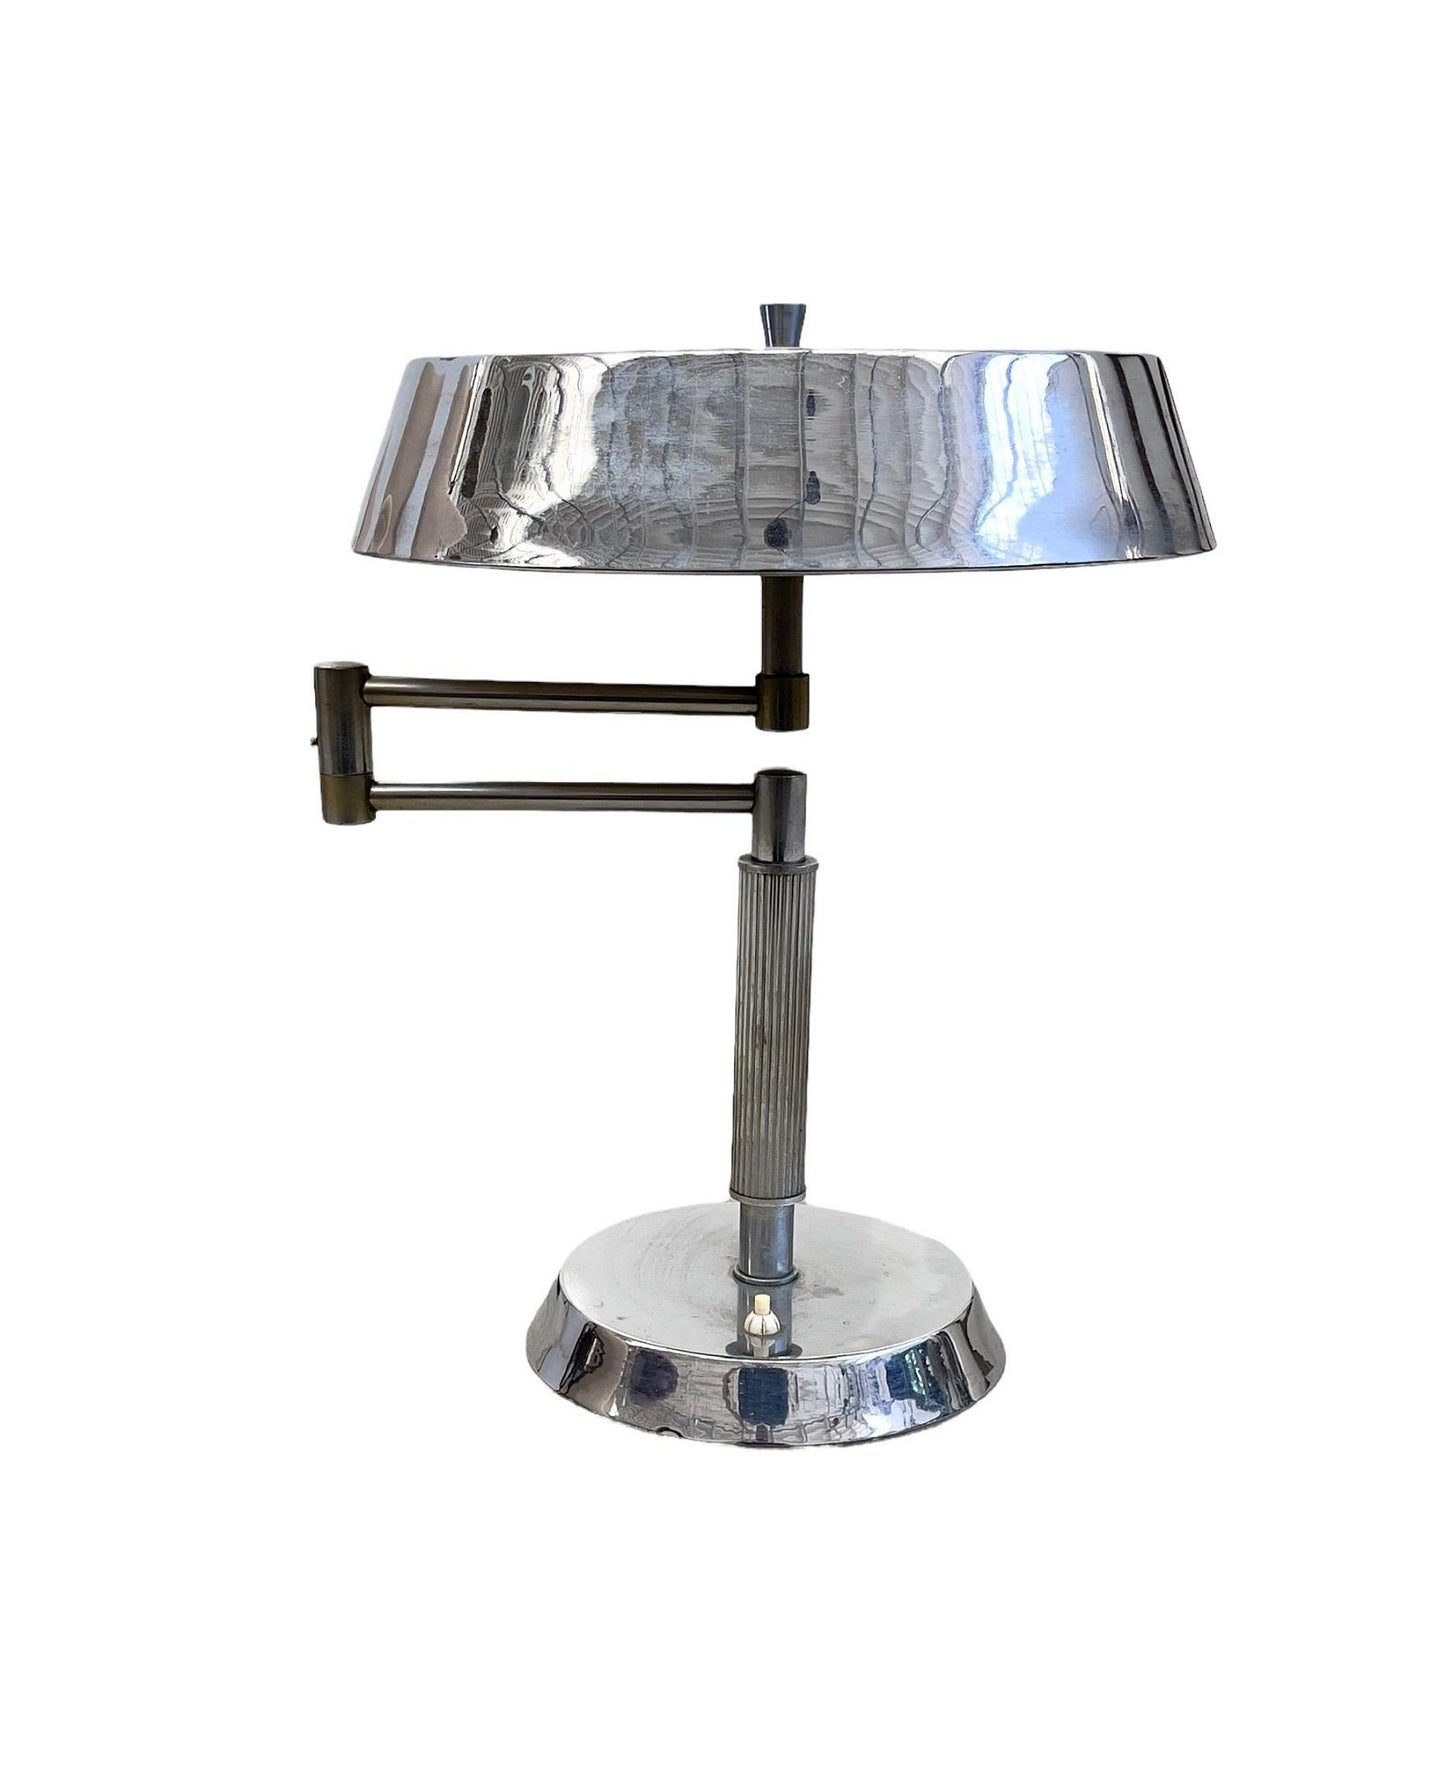 Oscar Torlasco for Lumi Table lamp, 1950s